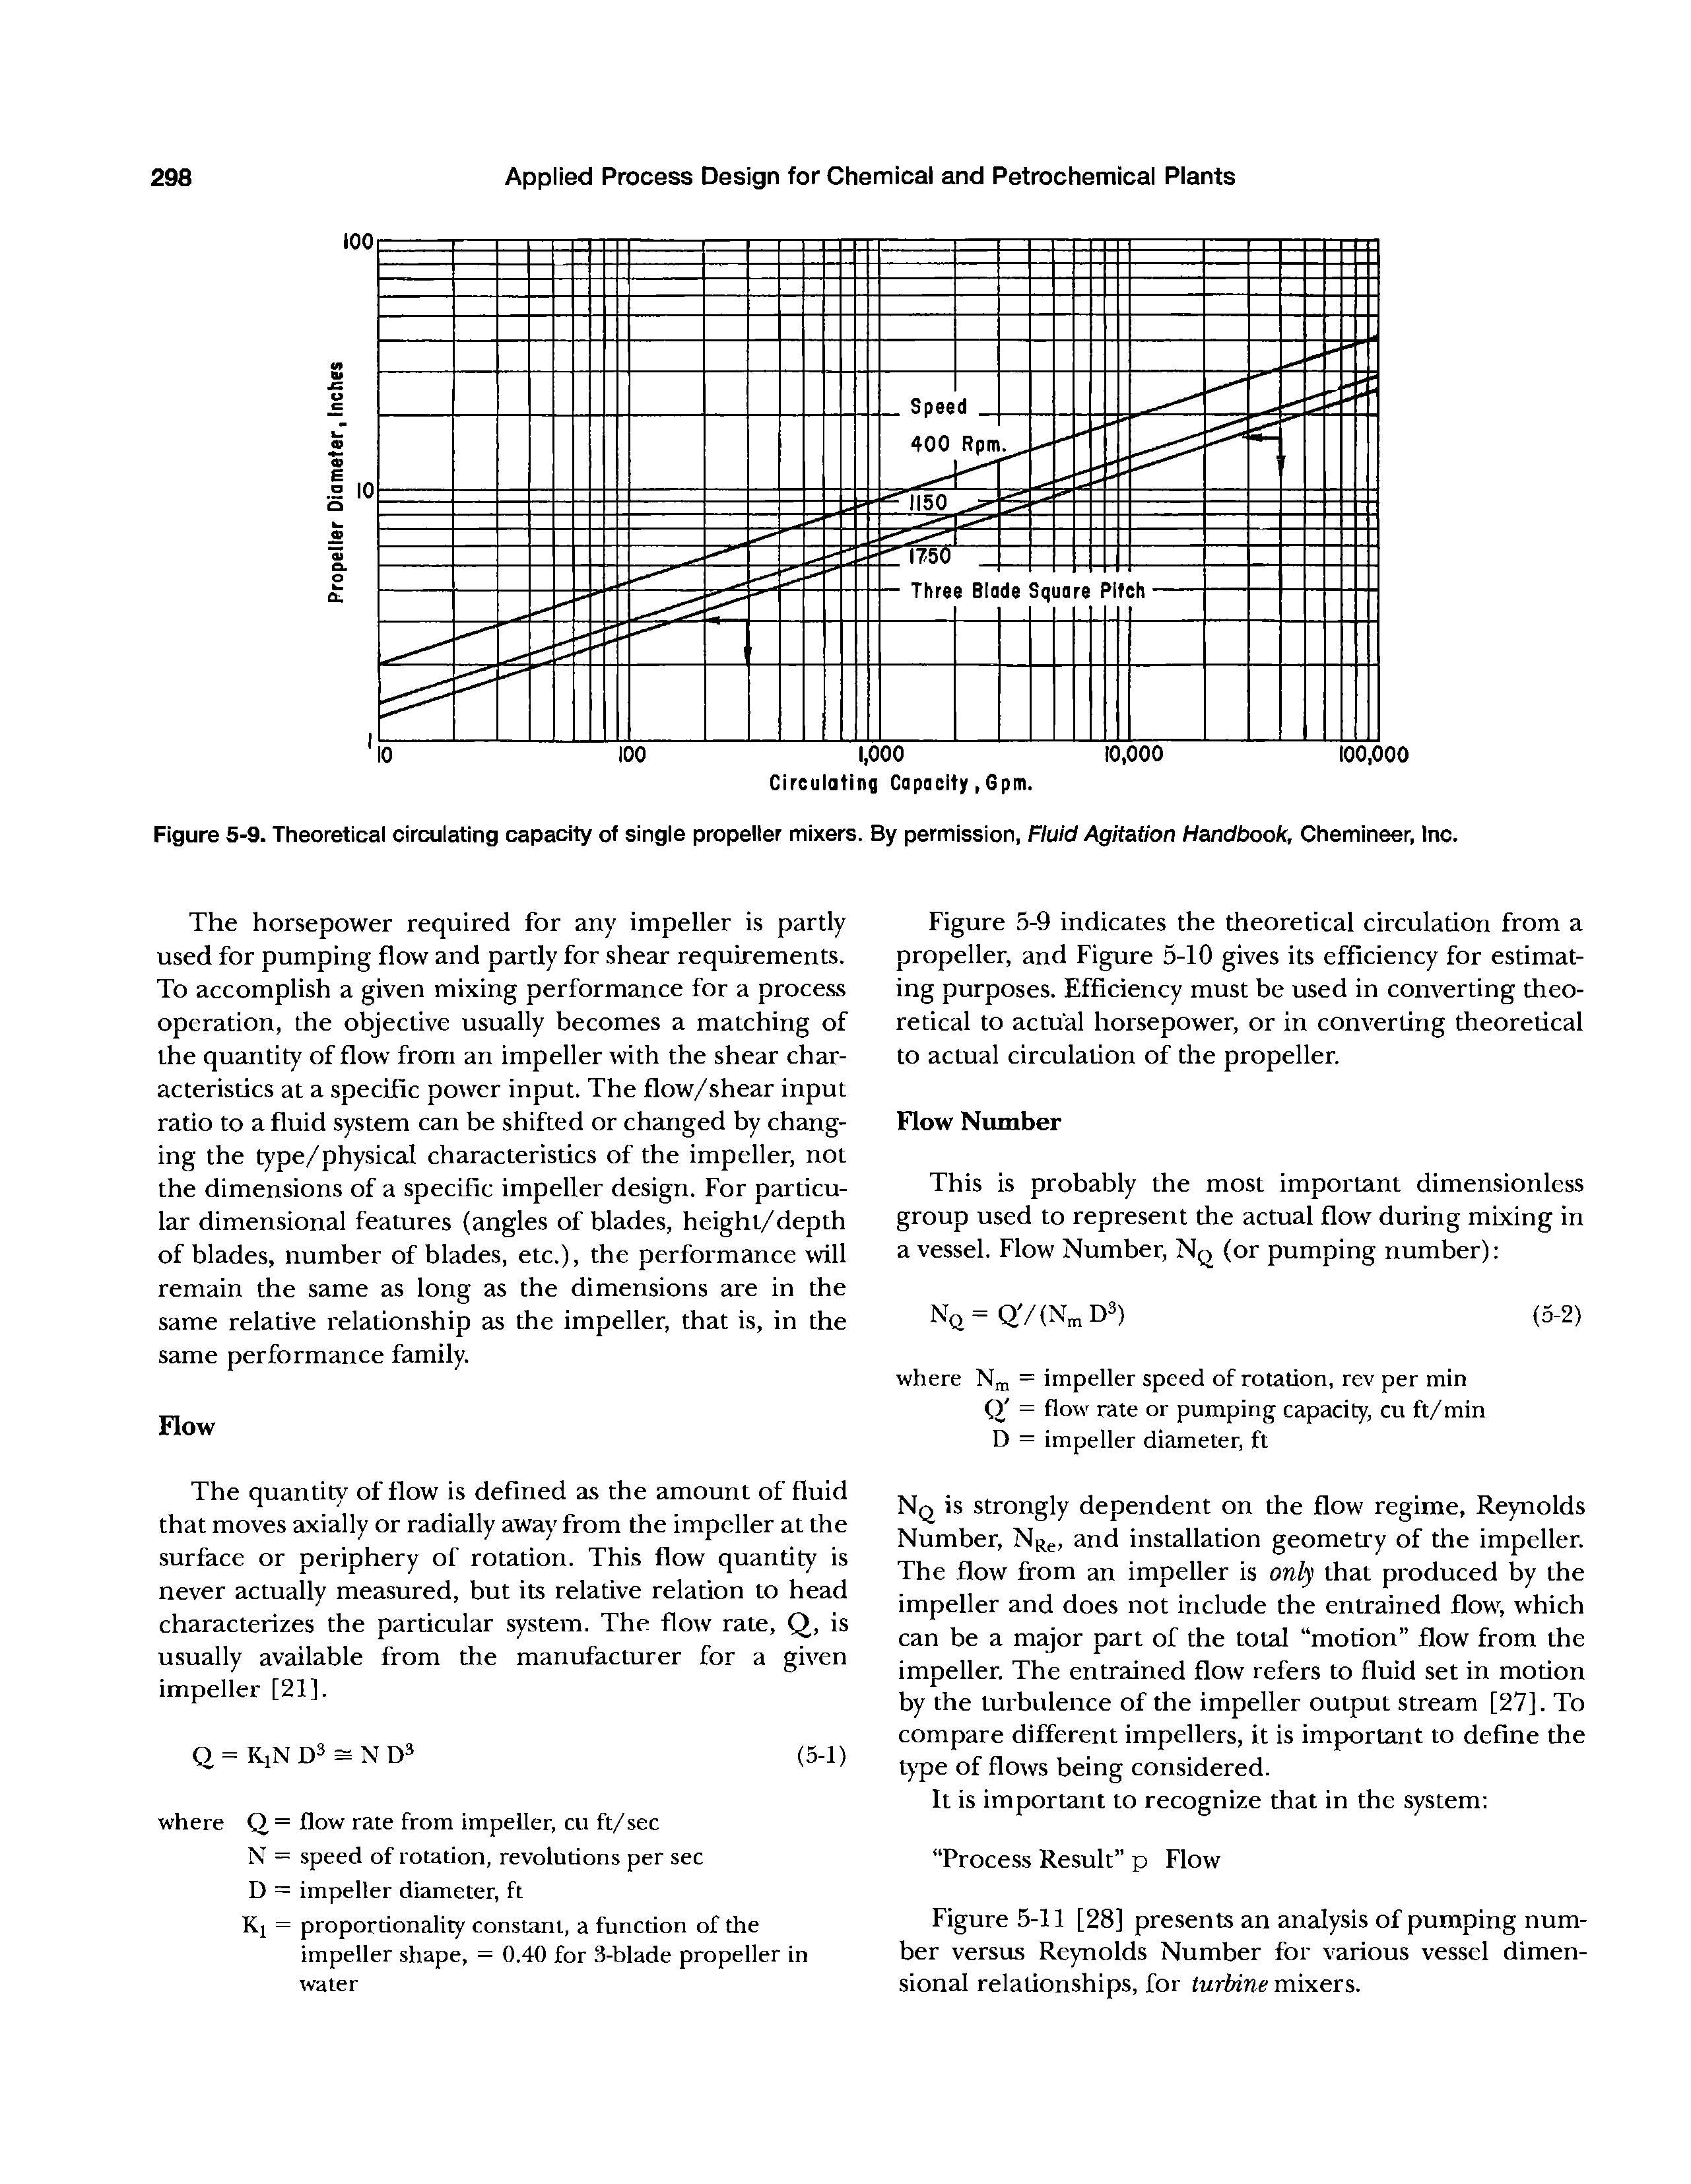 Figure 5-9. Theoretical circulating capacity of single propeller mixers. By permission, Fluid Agitation Handbook, Chemineer, Inc.